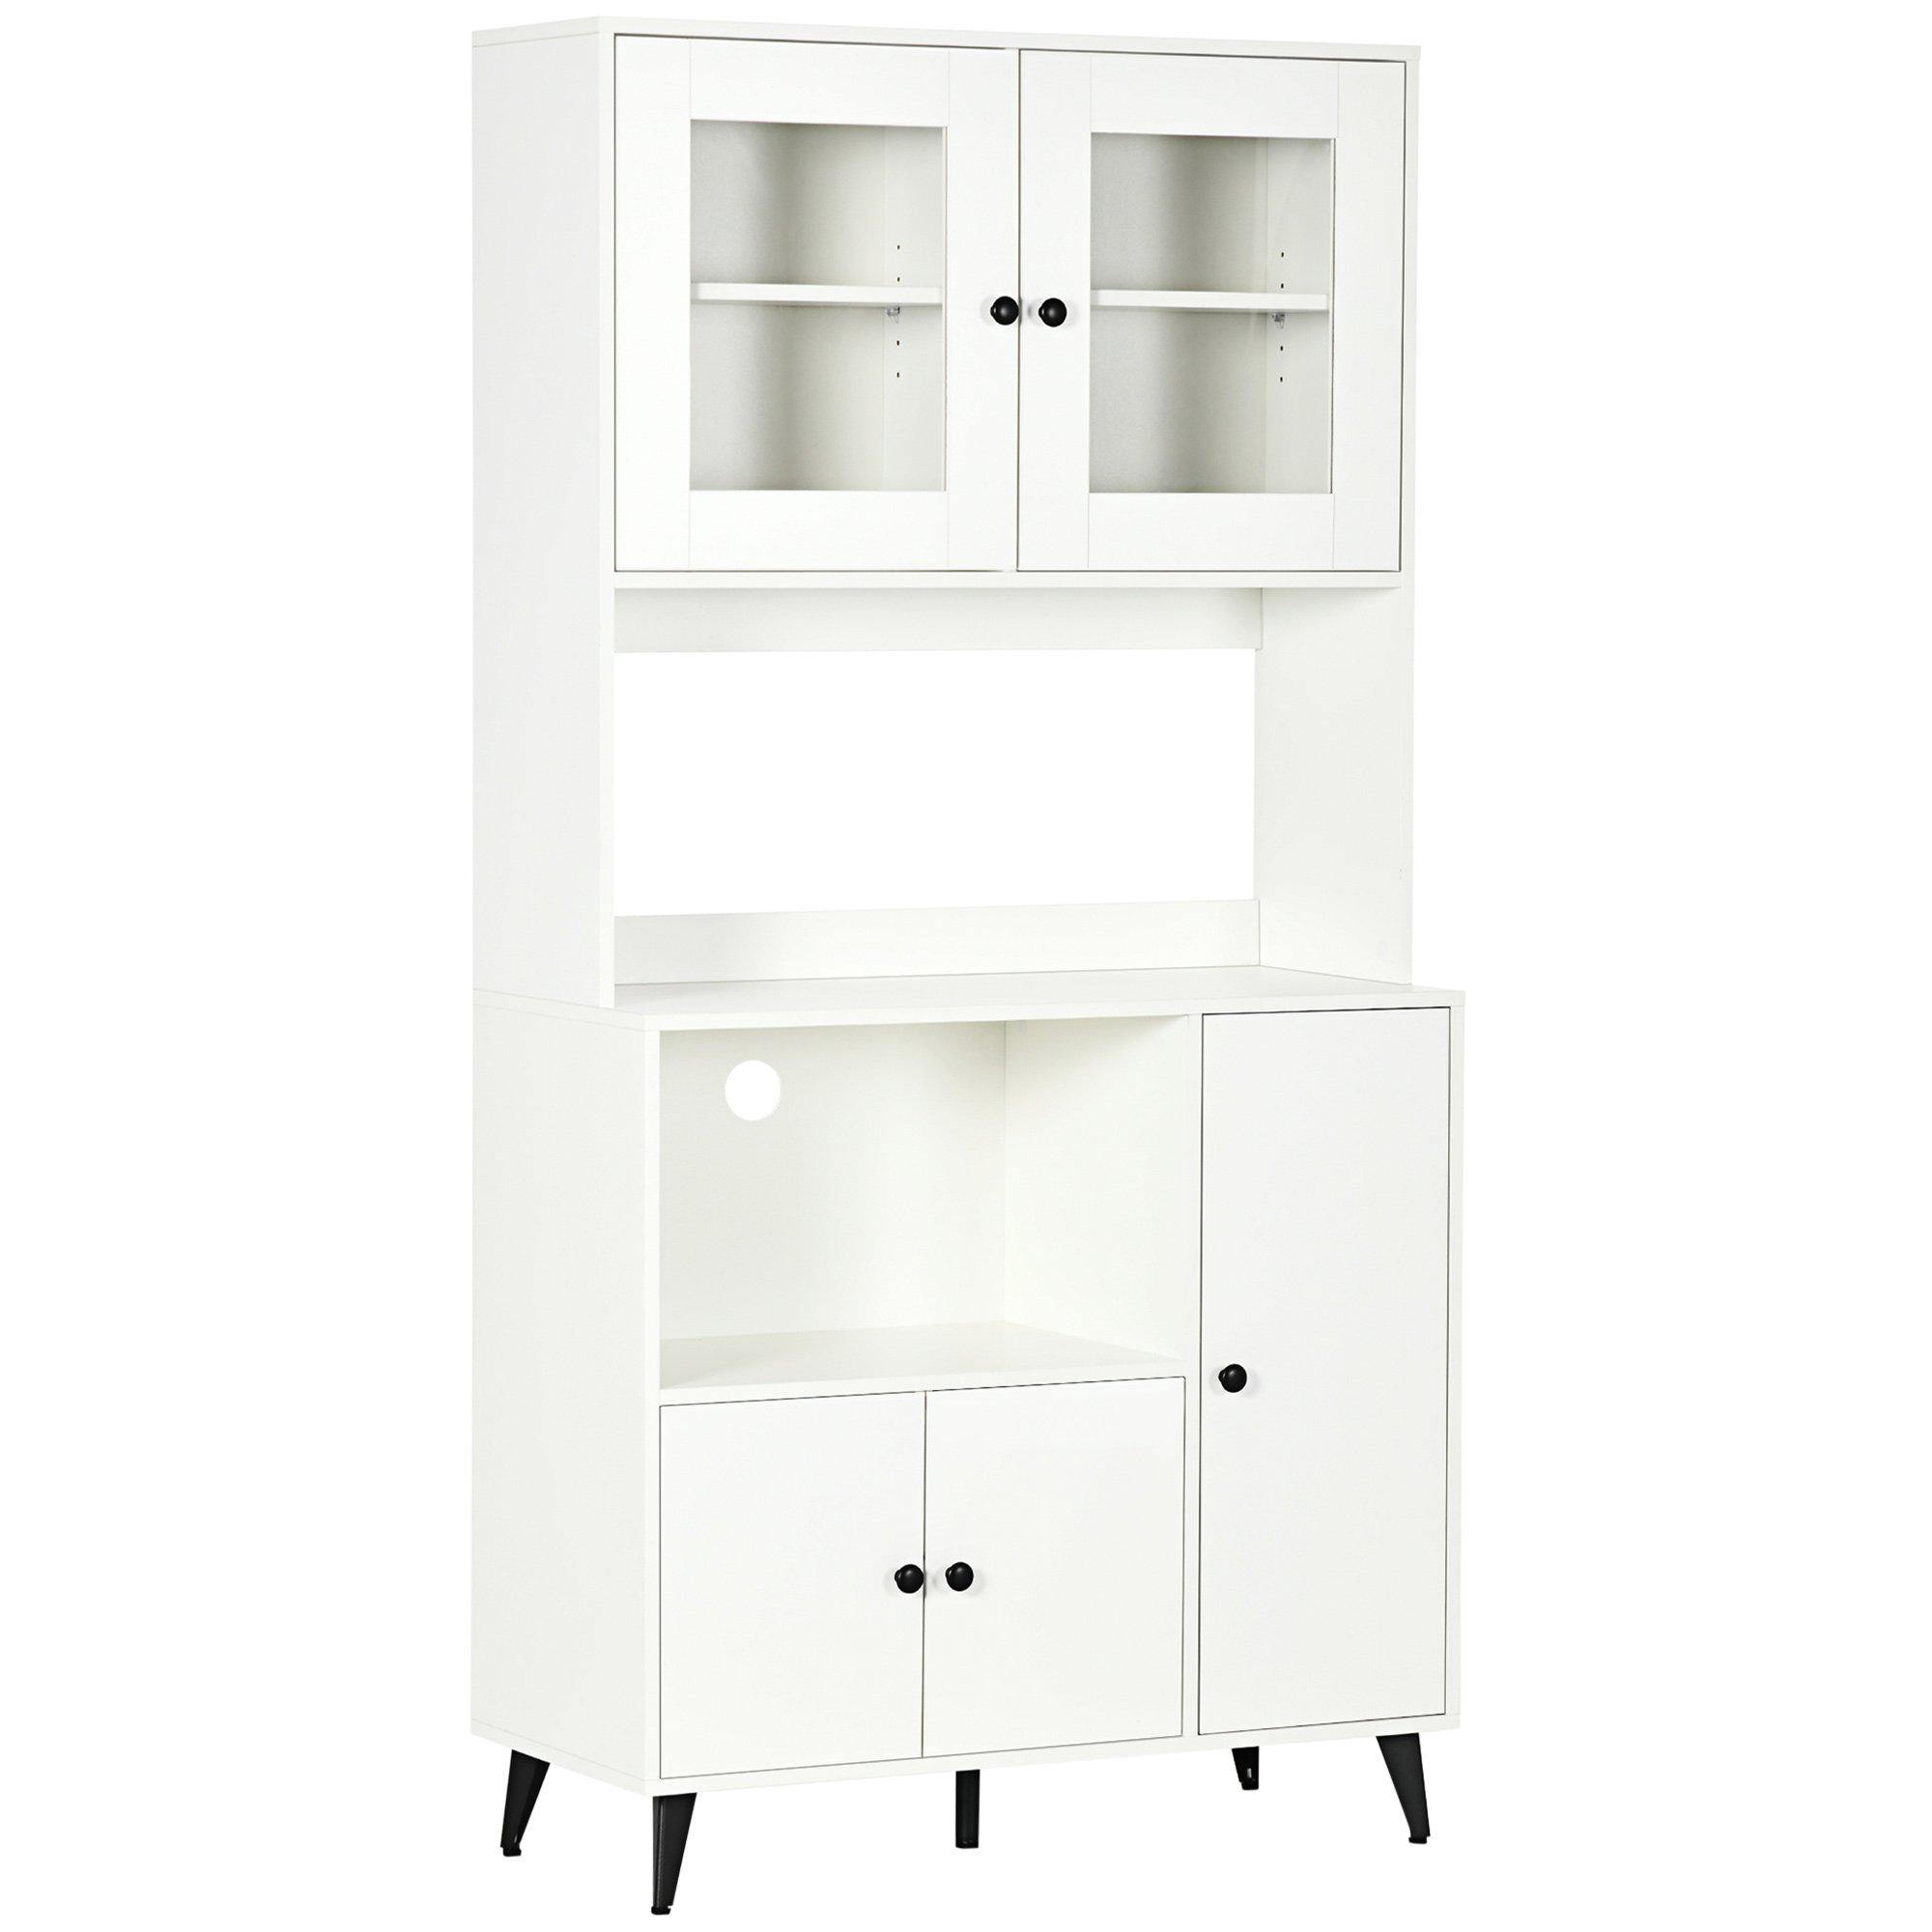 Freestanding Kitchen Storage Cabinet   Cupboards Adjustable Shelves